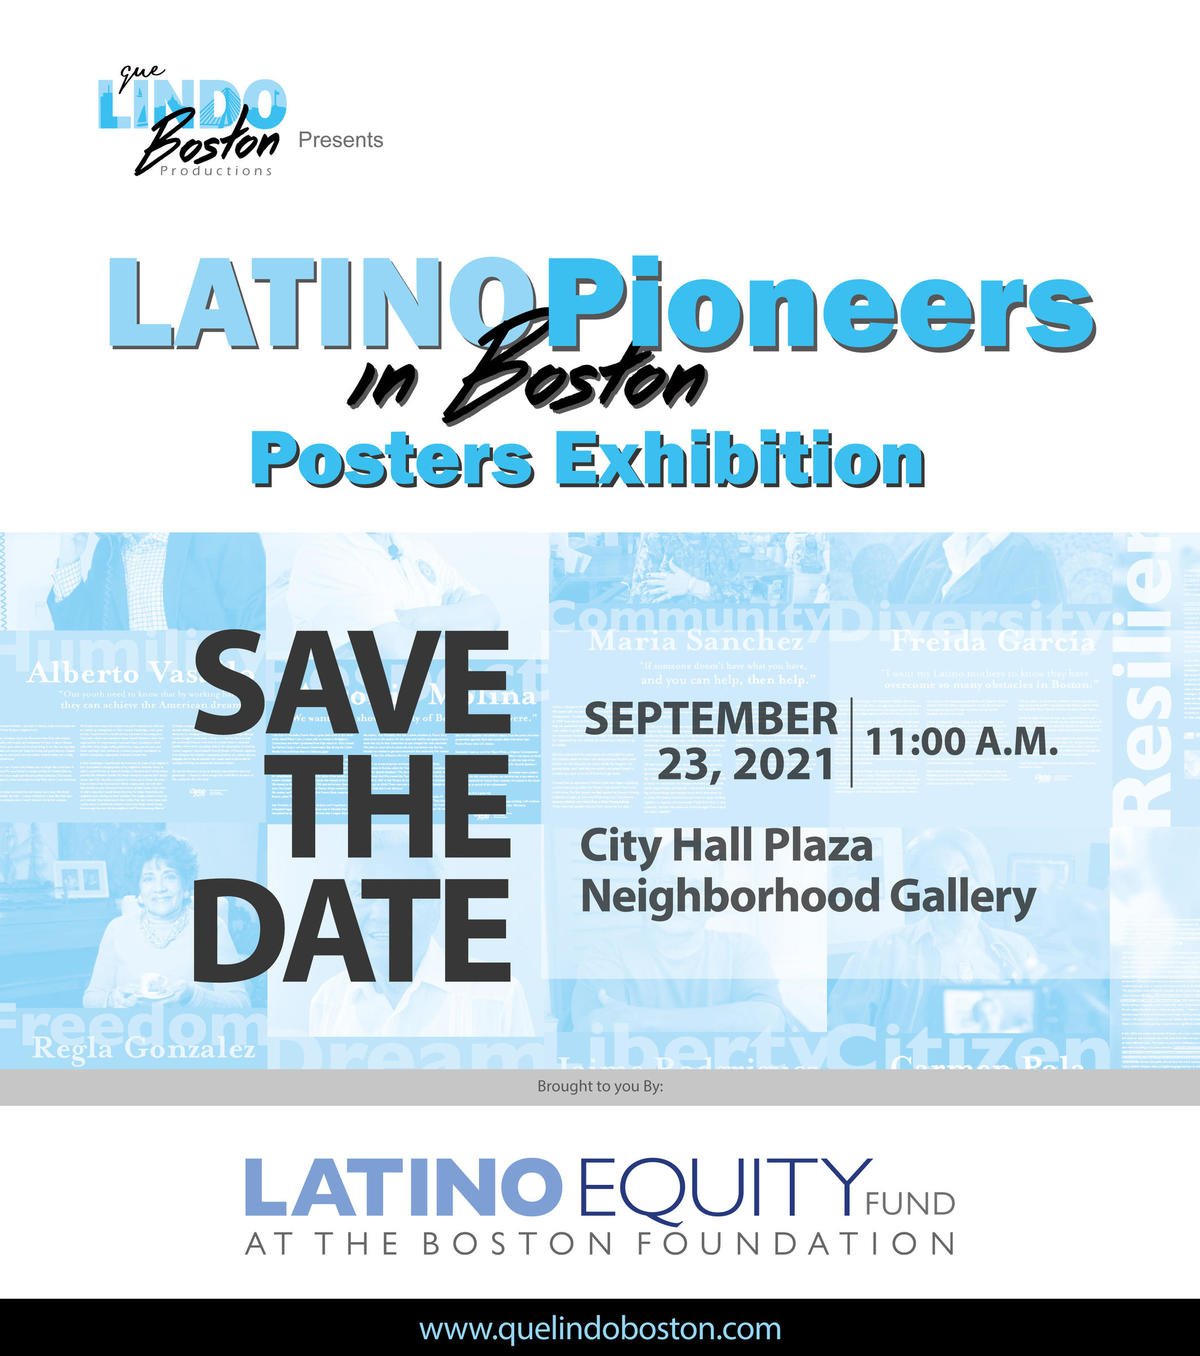 Latino Pioneers reception flyer